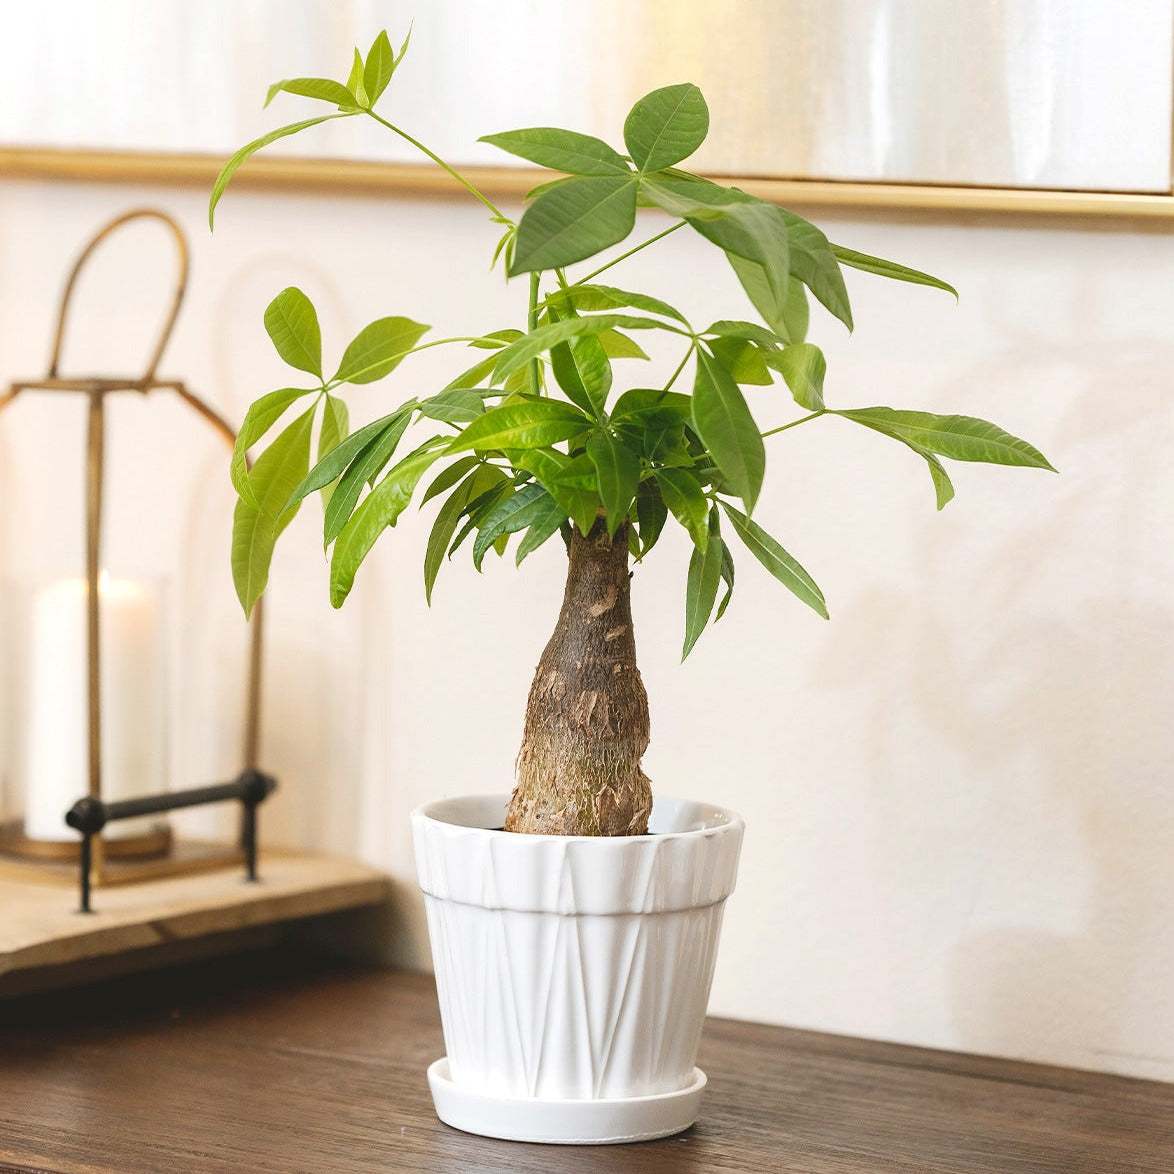 Pachira Stump Money Tree in decorative pot for sale, houseplant decor ideas